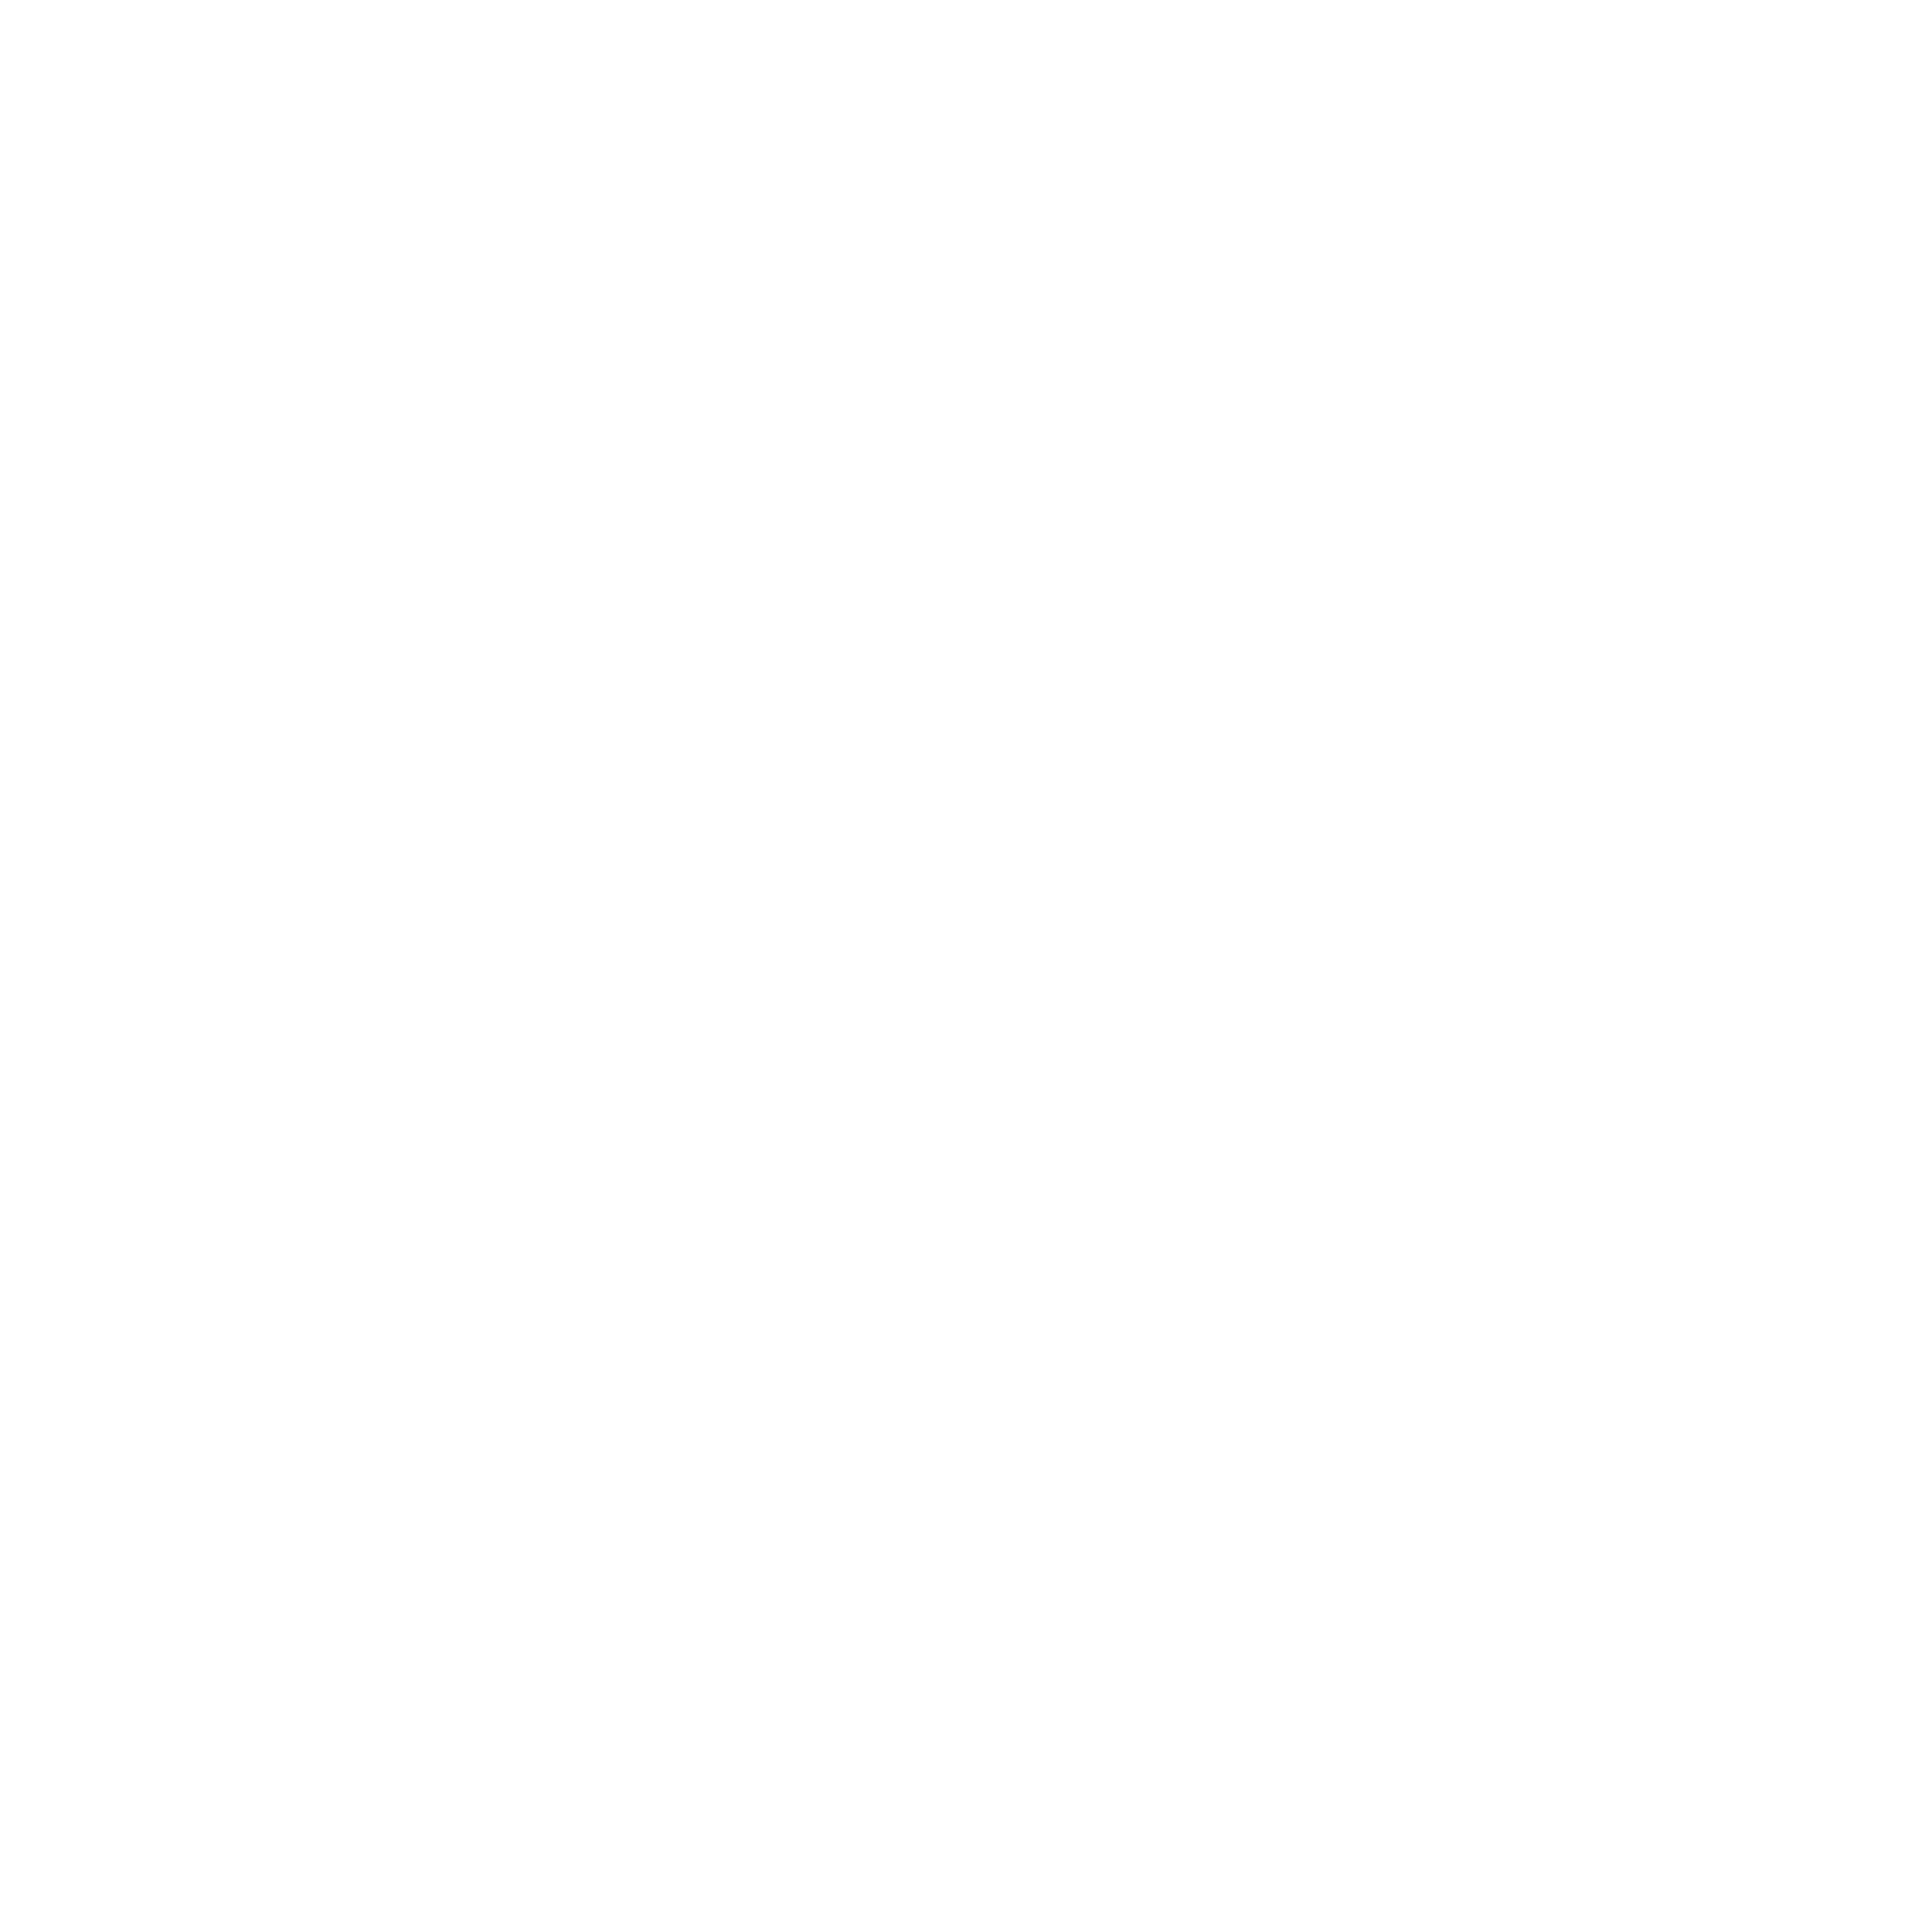 Foot Action Logo - Footaction USA Logo PNG Transparent & SVG Vector - Freebie Supply